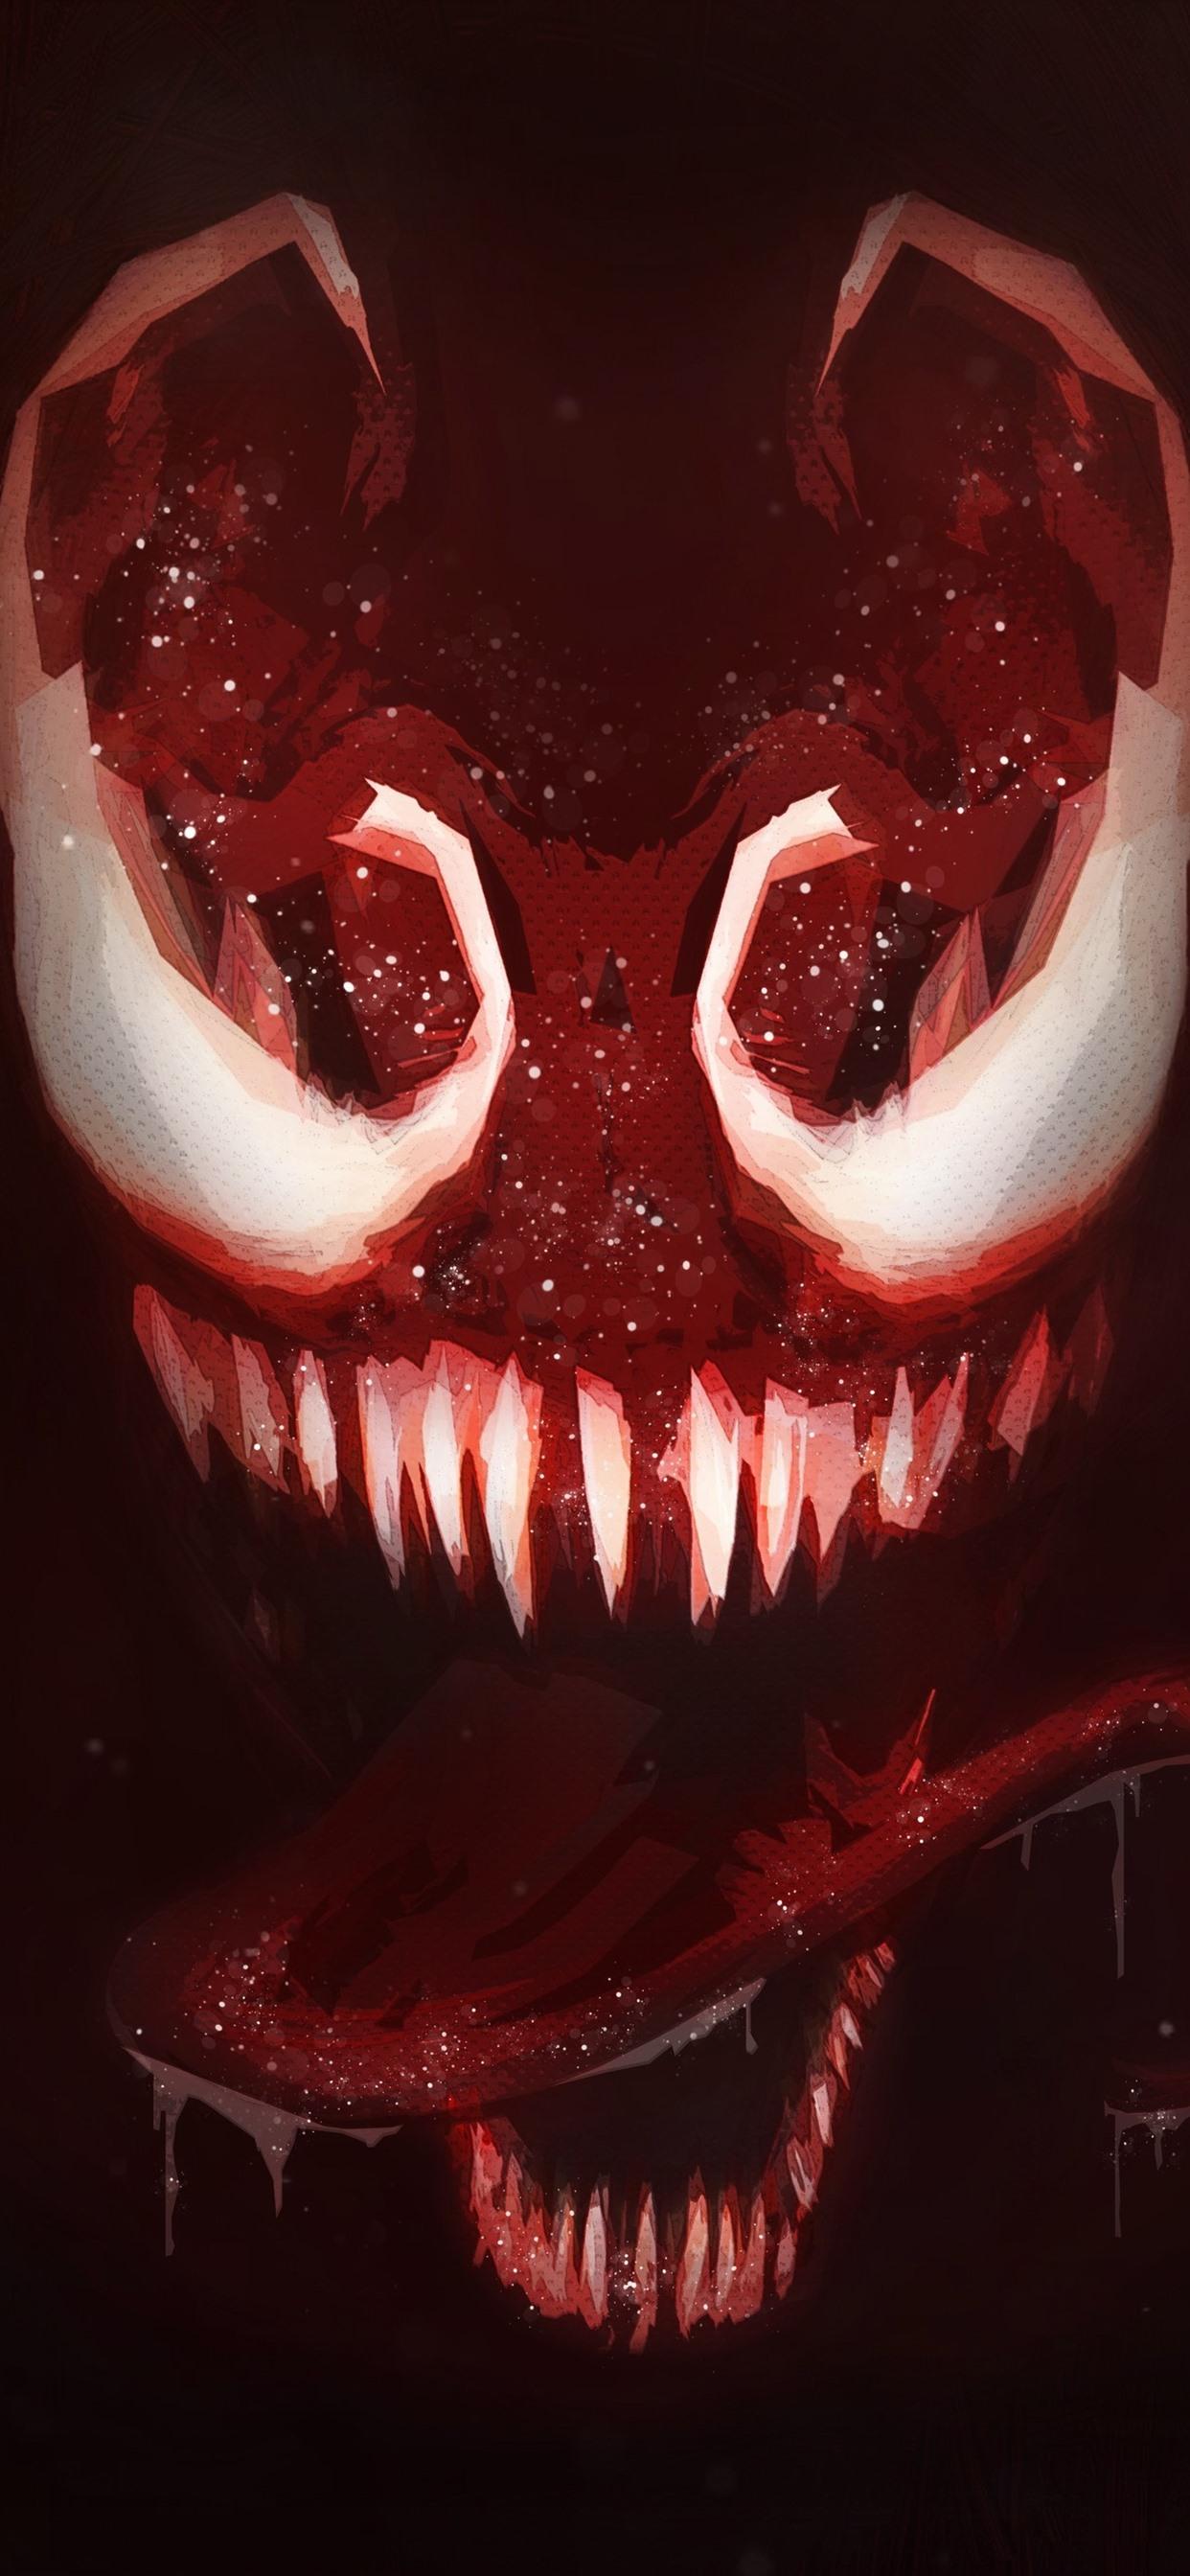 Wallpaper Venom, teeth, horror, art picture 5120x2880 UHD 5K